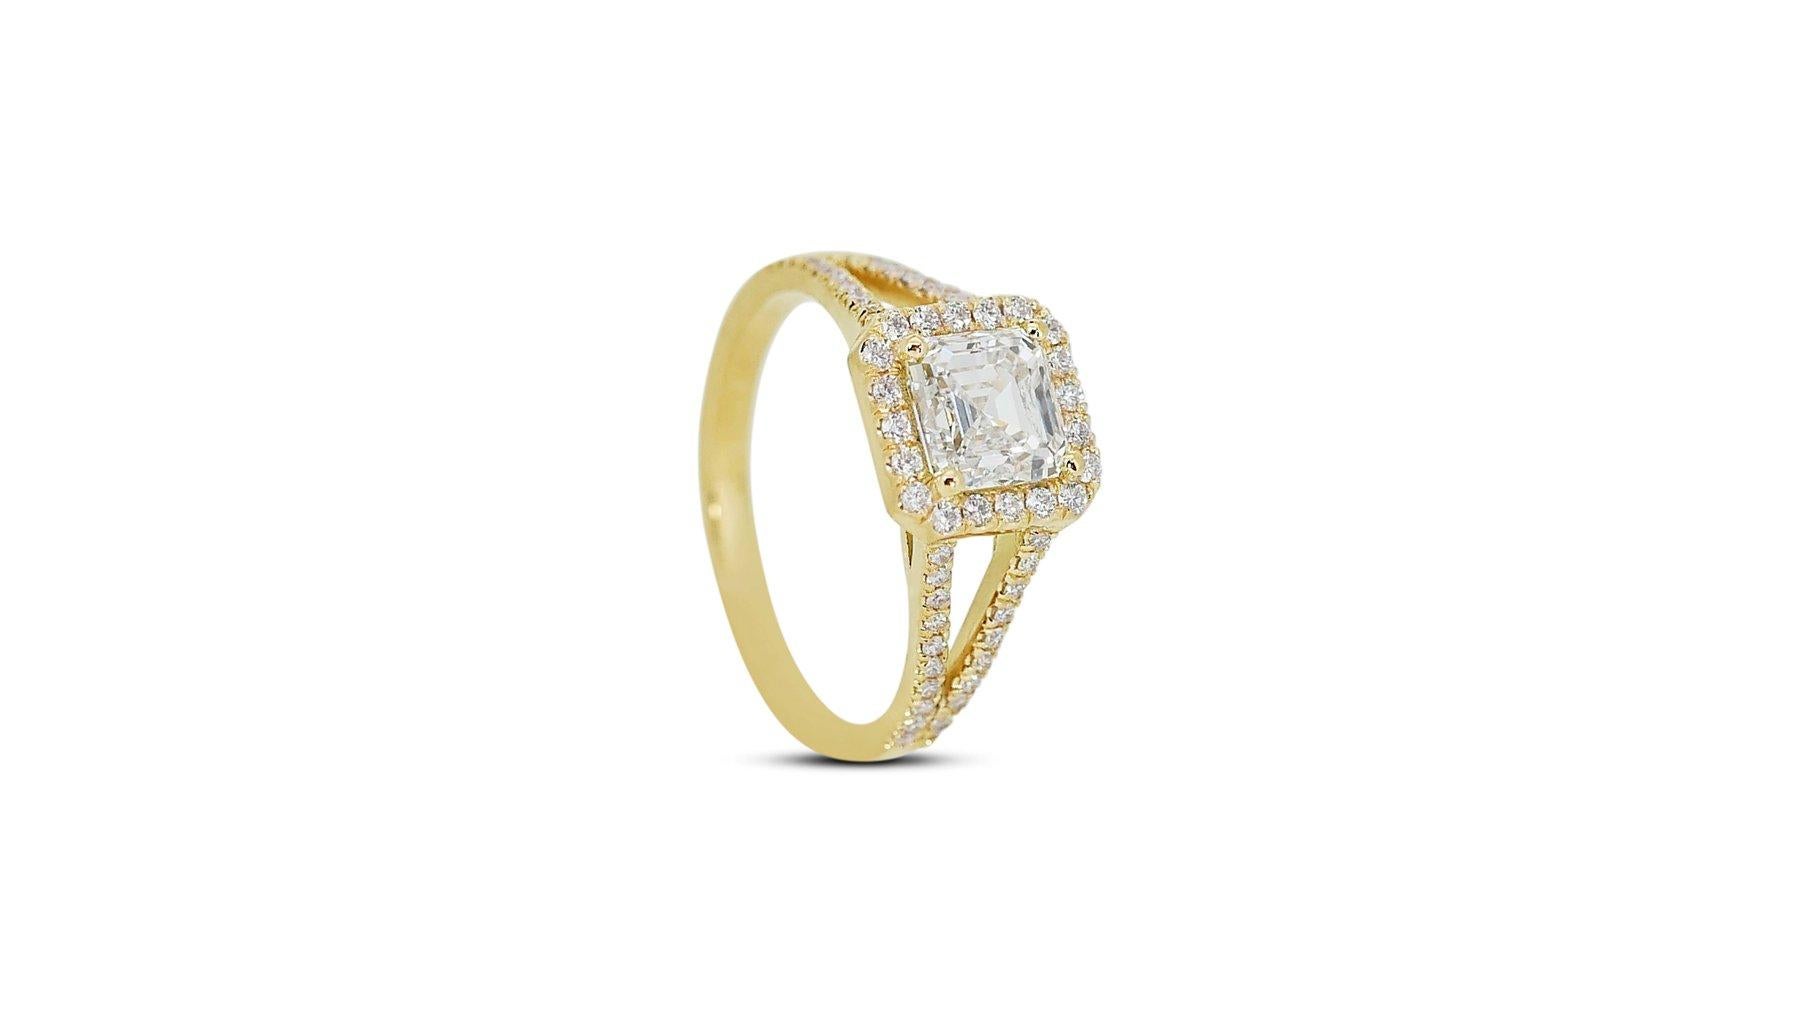 Emerald Cut Stunning 1.5 carat Square Emerald Natural Diamond Ring